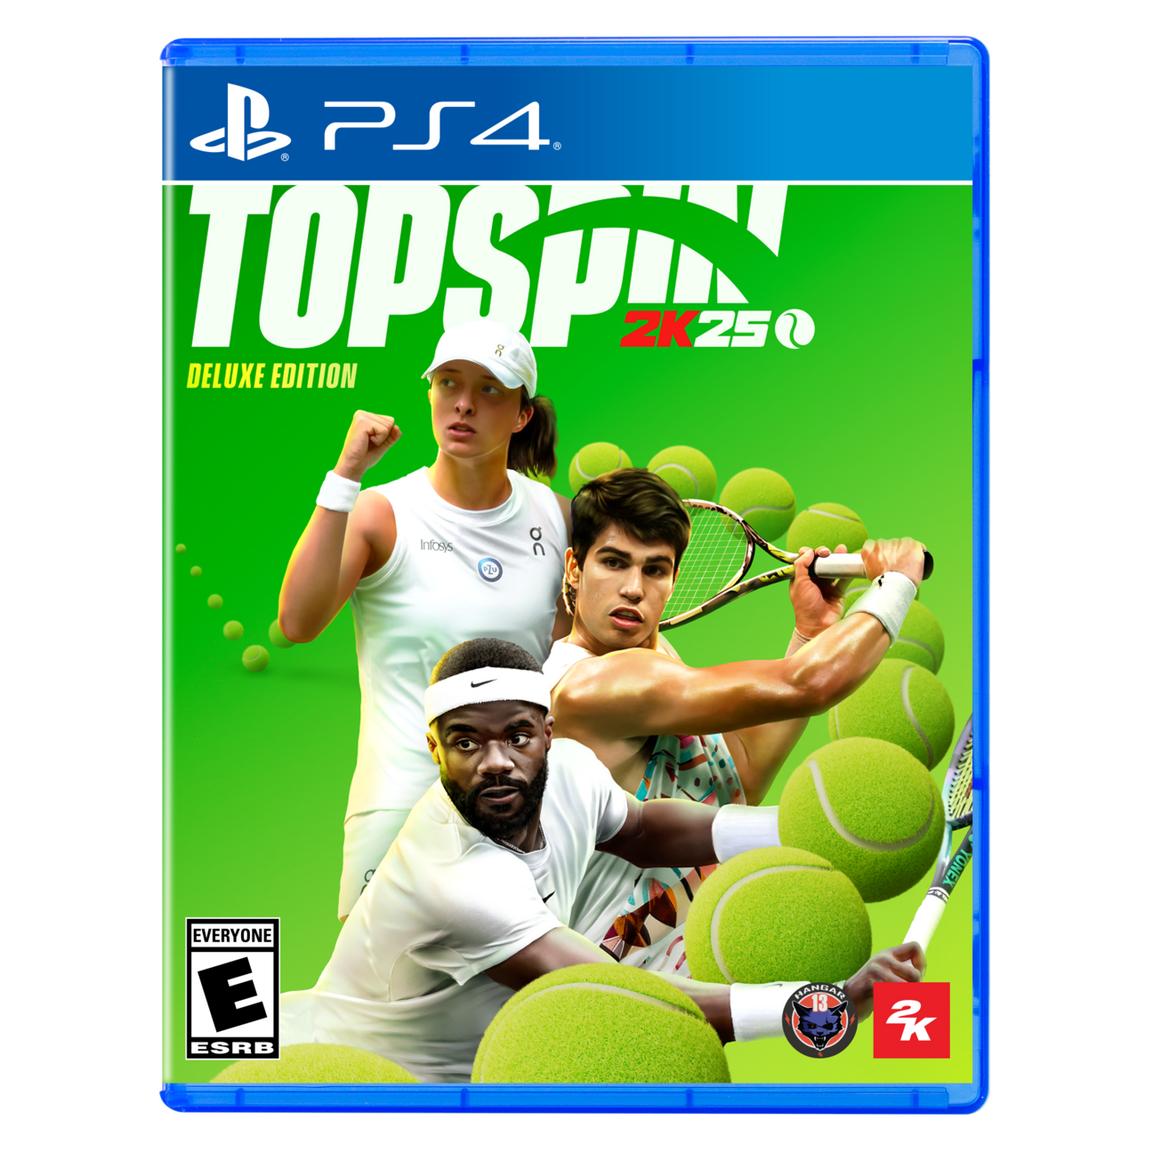 Видеоигра TopSpin 2K25 Deluxe Edition - PlayStation 4 штауффер рене роджер федерер биография